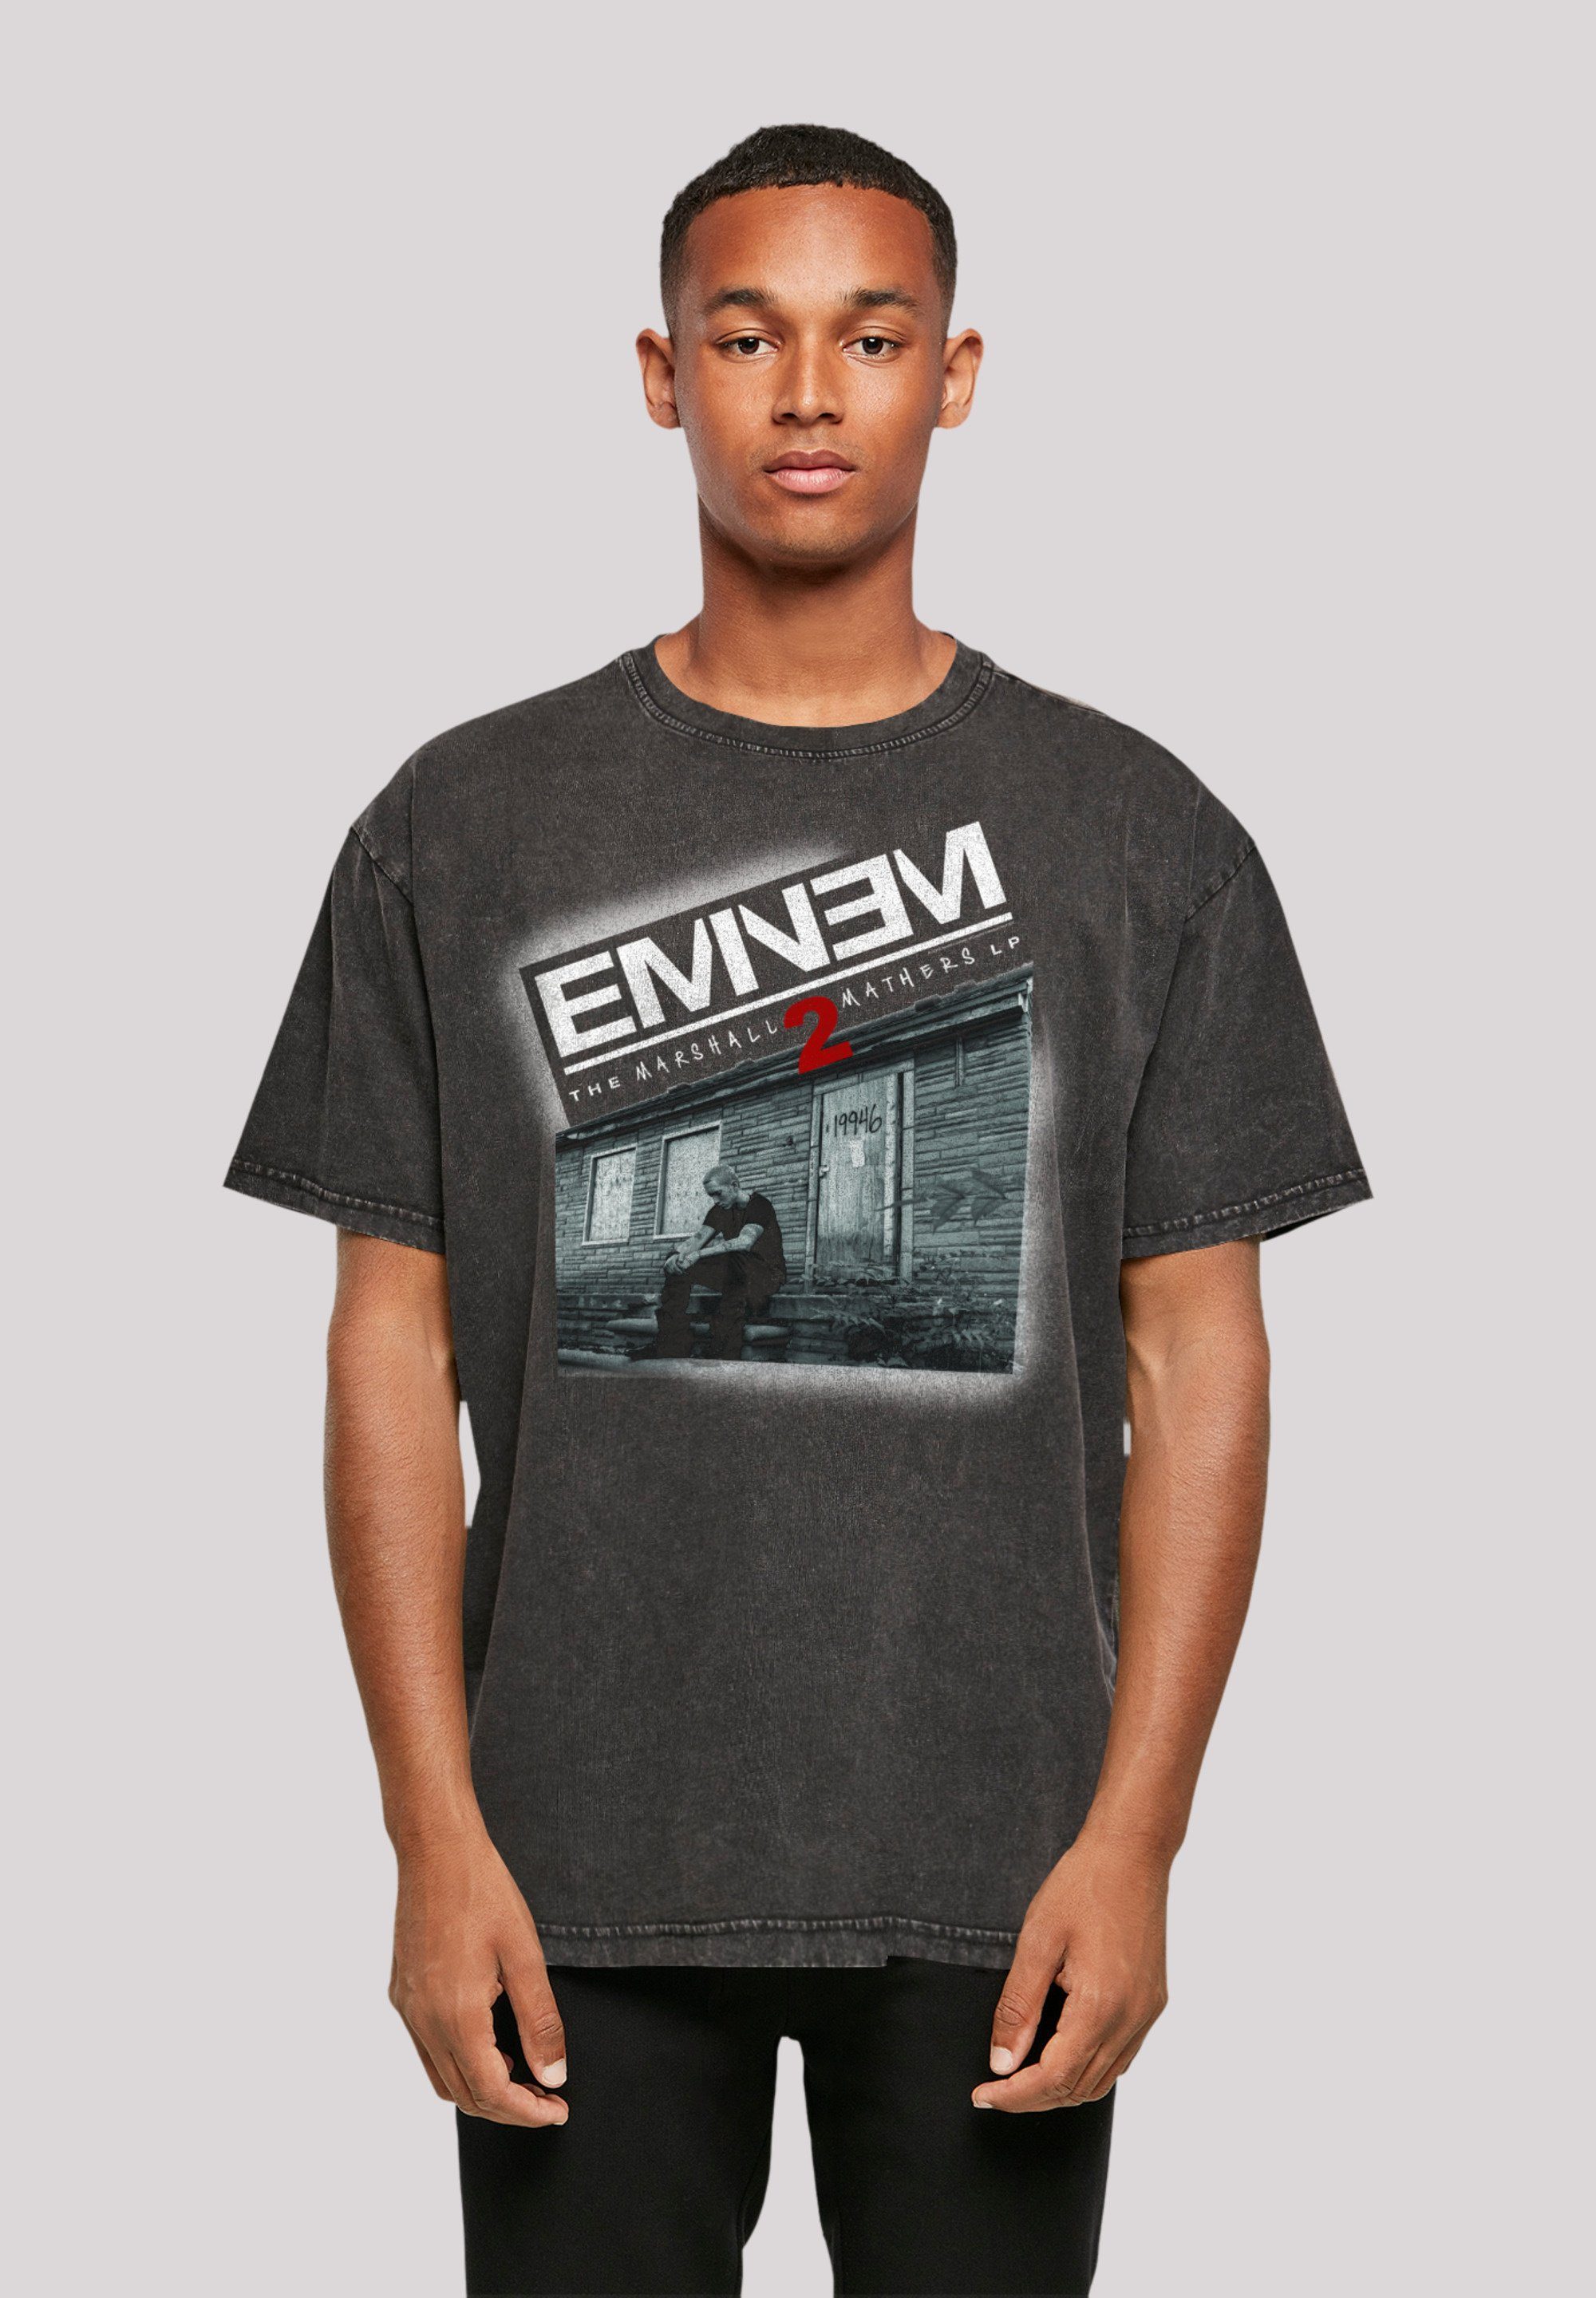 F4NT4STIC T-Shirt Eminem Marshall Mathers 2 Oldschool Rap Music Premium Qualität, Musik schwarz